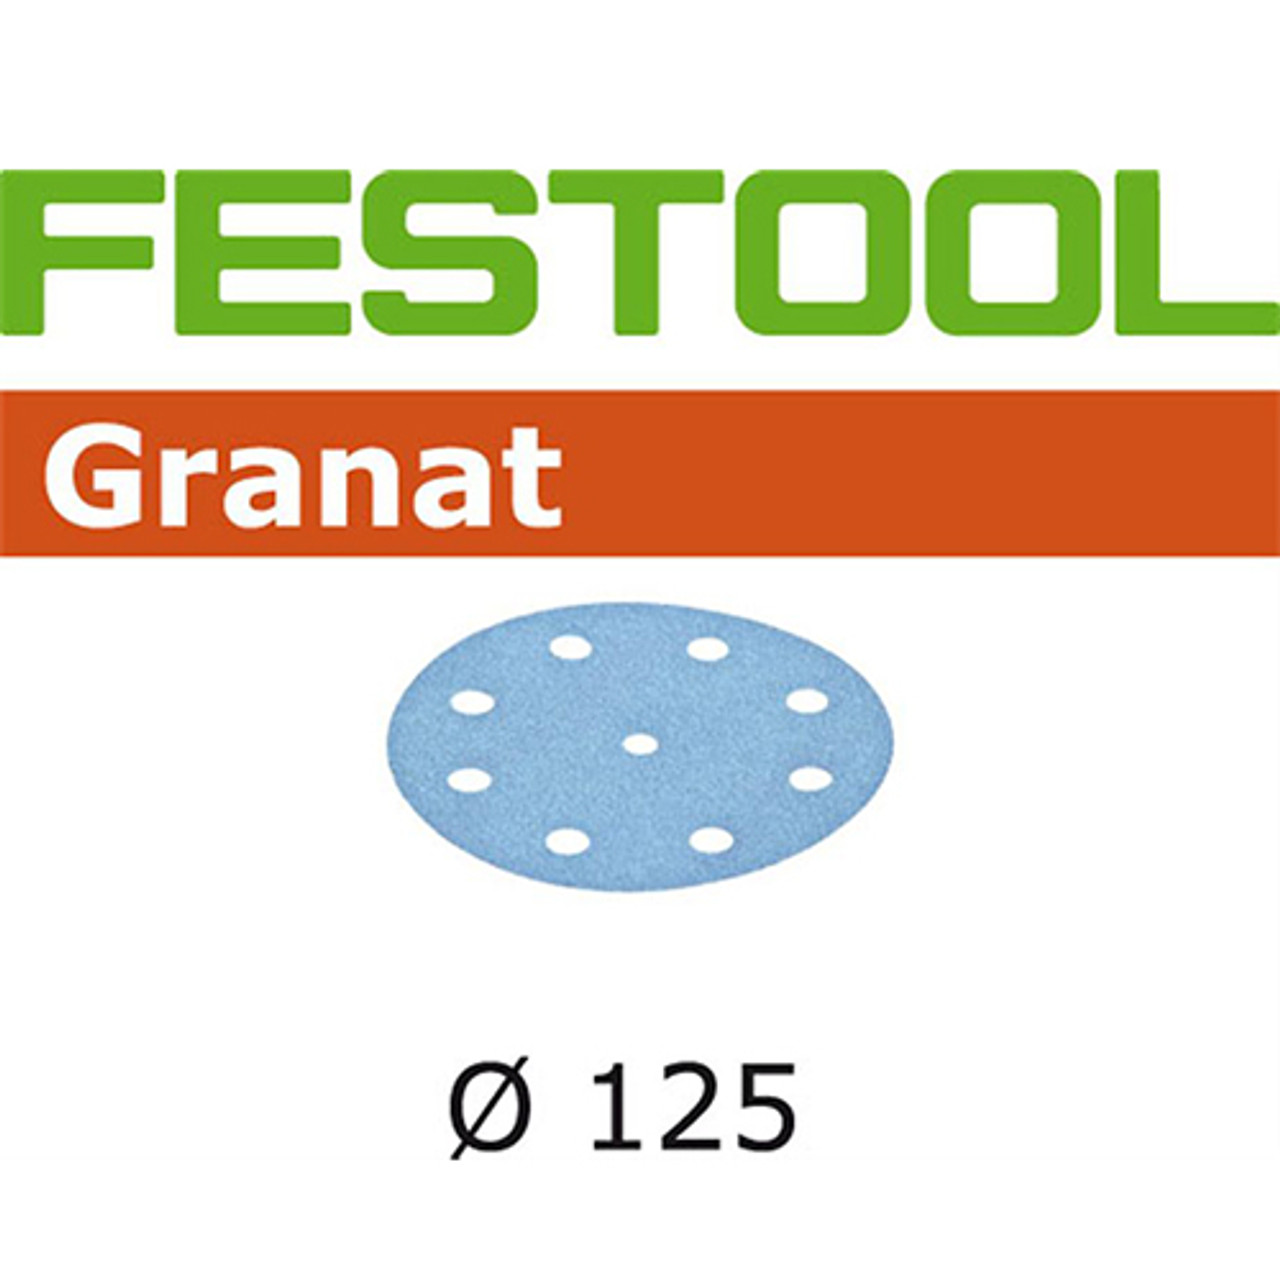 Festool ETS125, 120 Grit, Granat Sanding Discs, 100PK